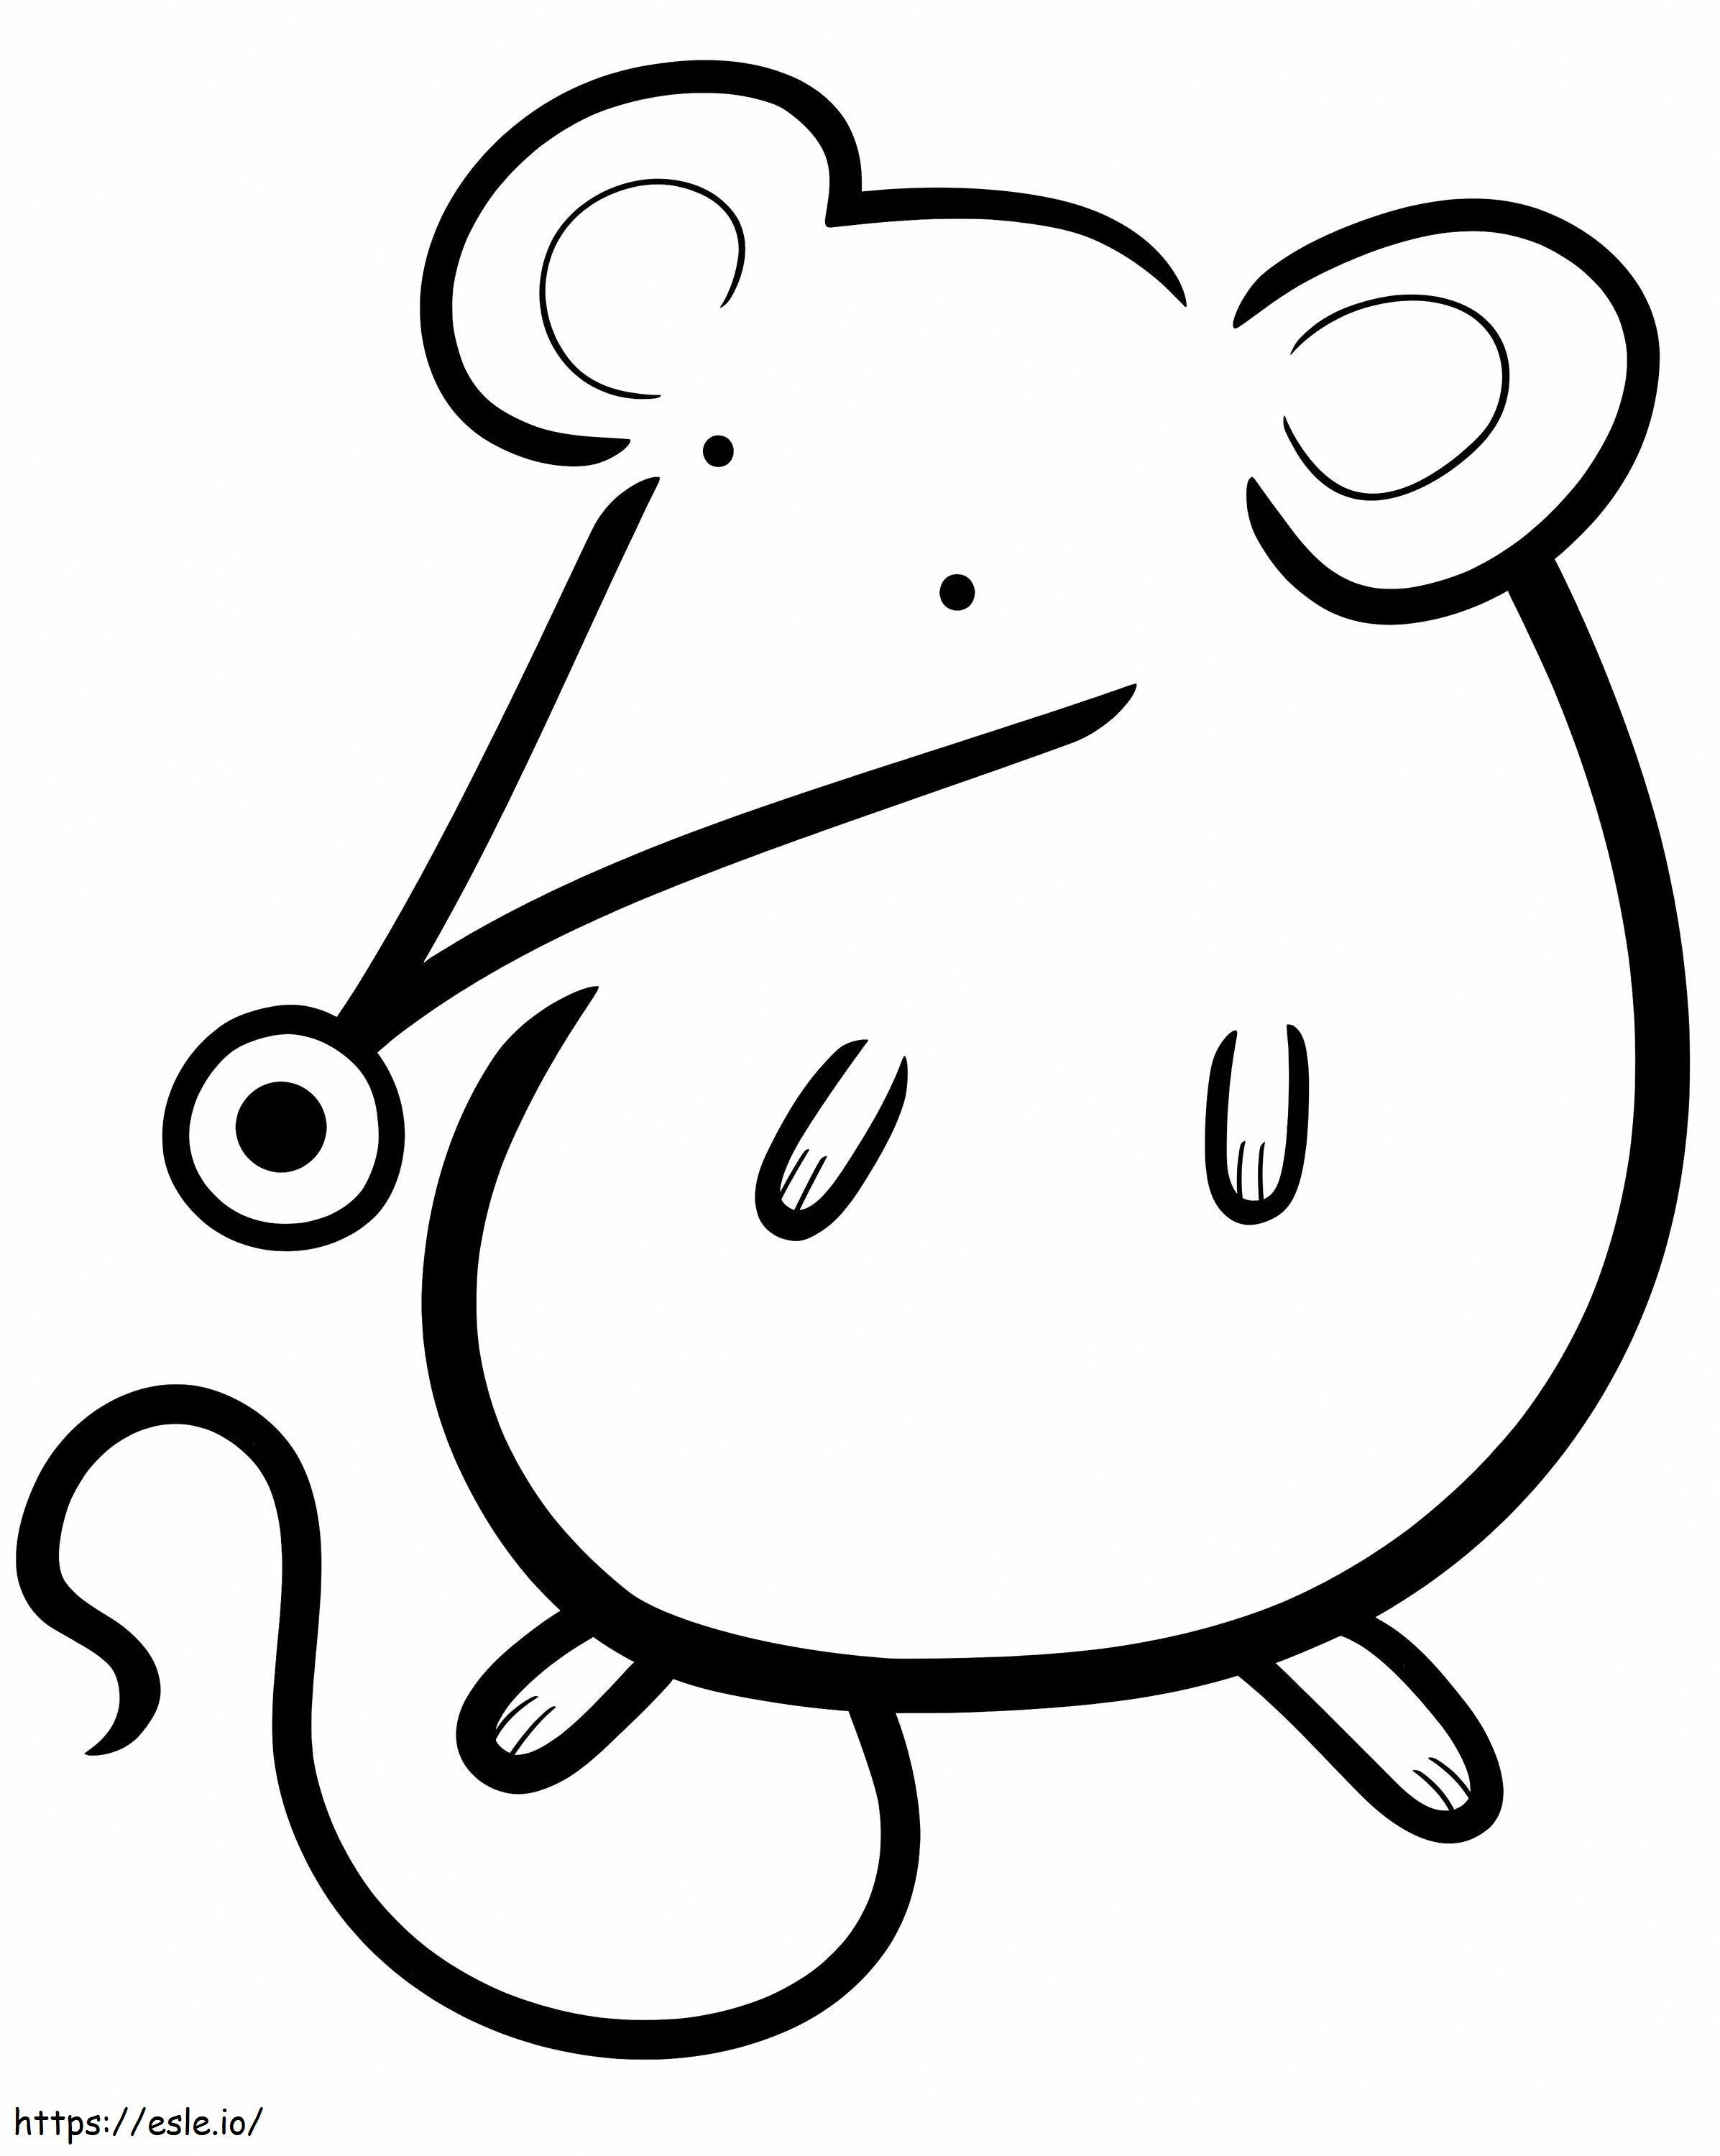 Desenho de rato fofo para livro de colorir vetor 943082 para colorir